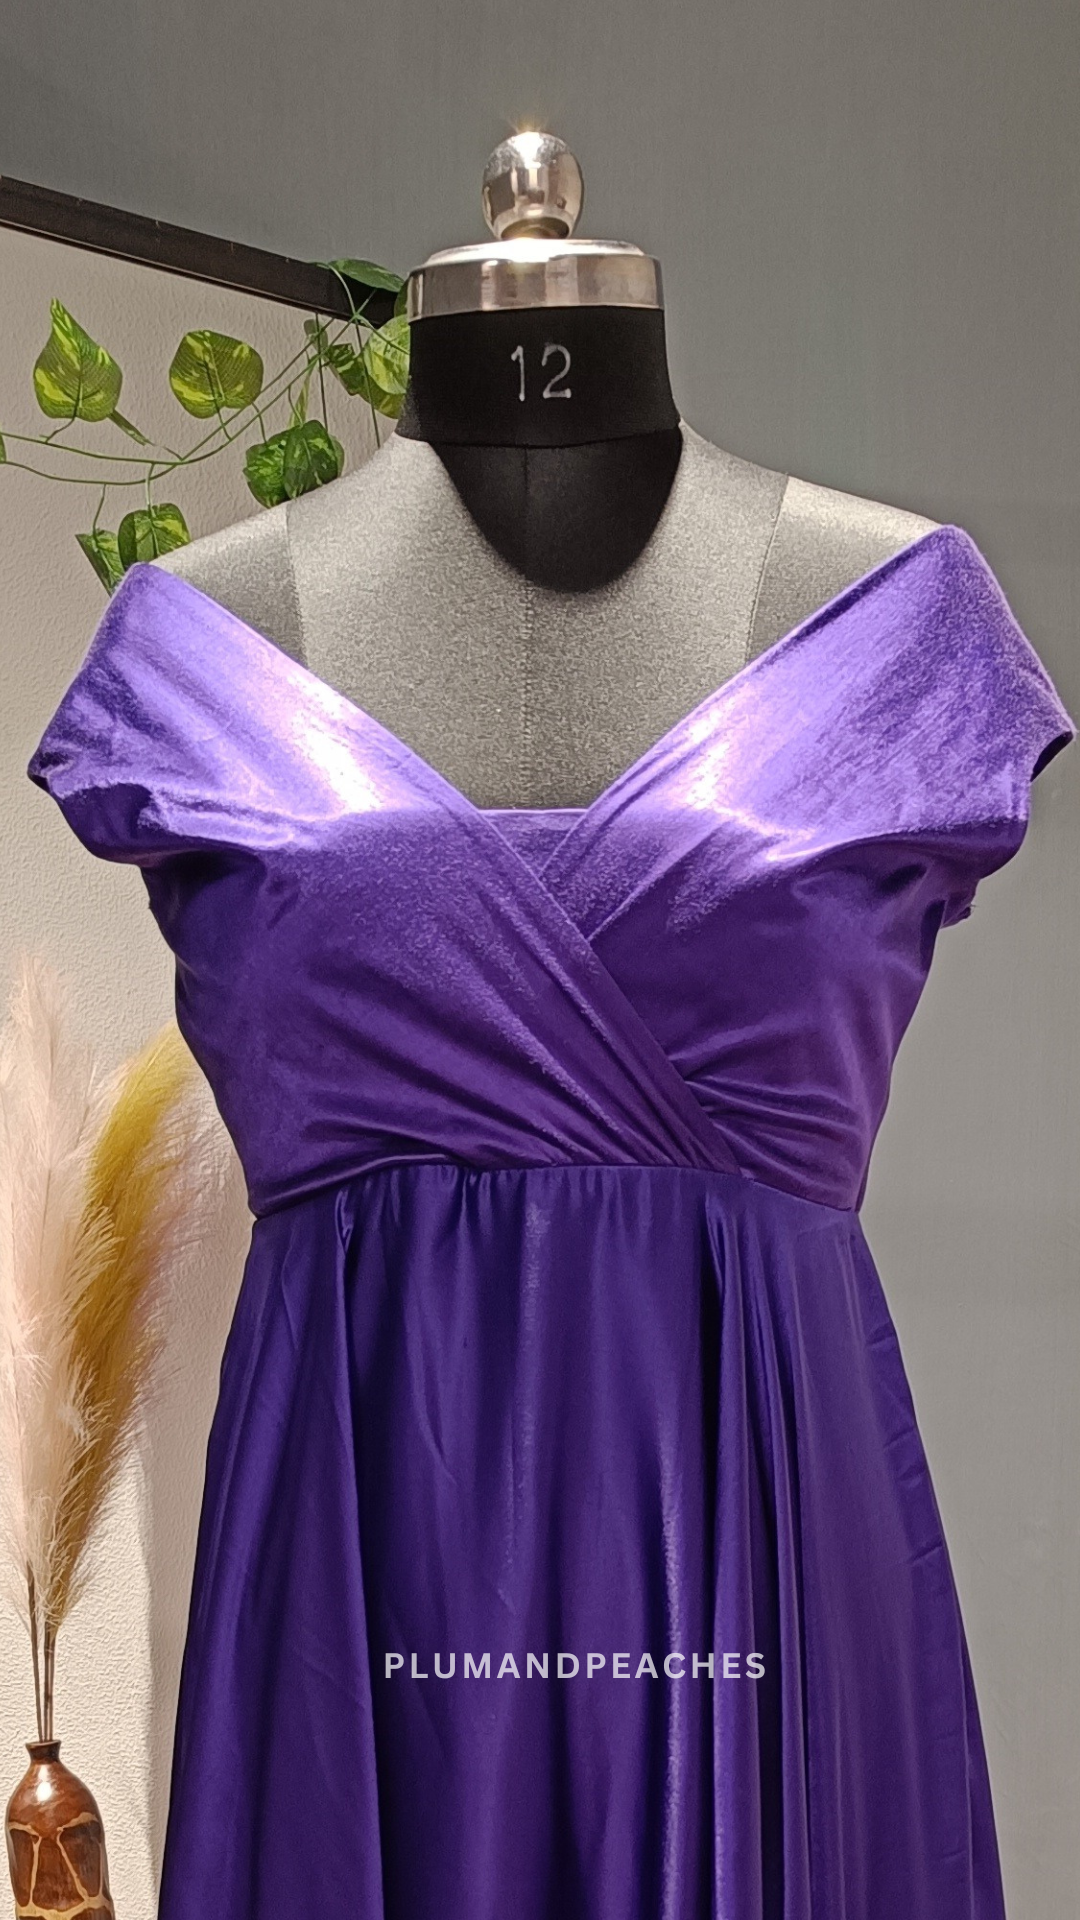 Off-Shoulder Maternity Dress in purple color